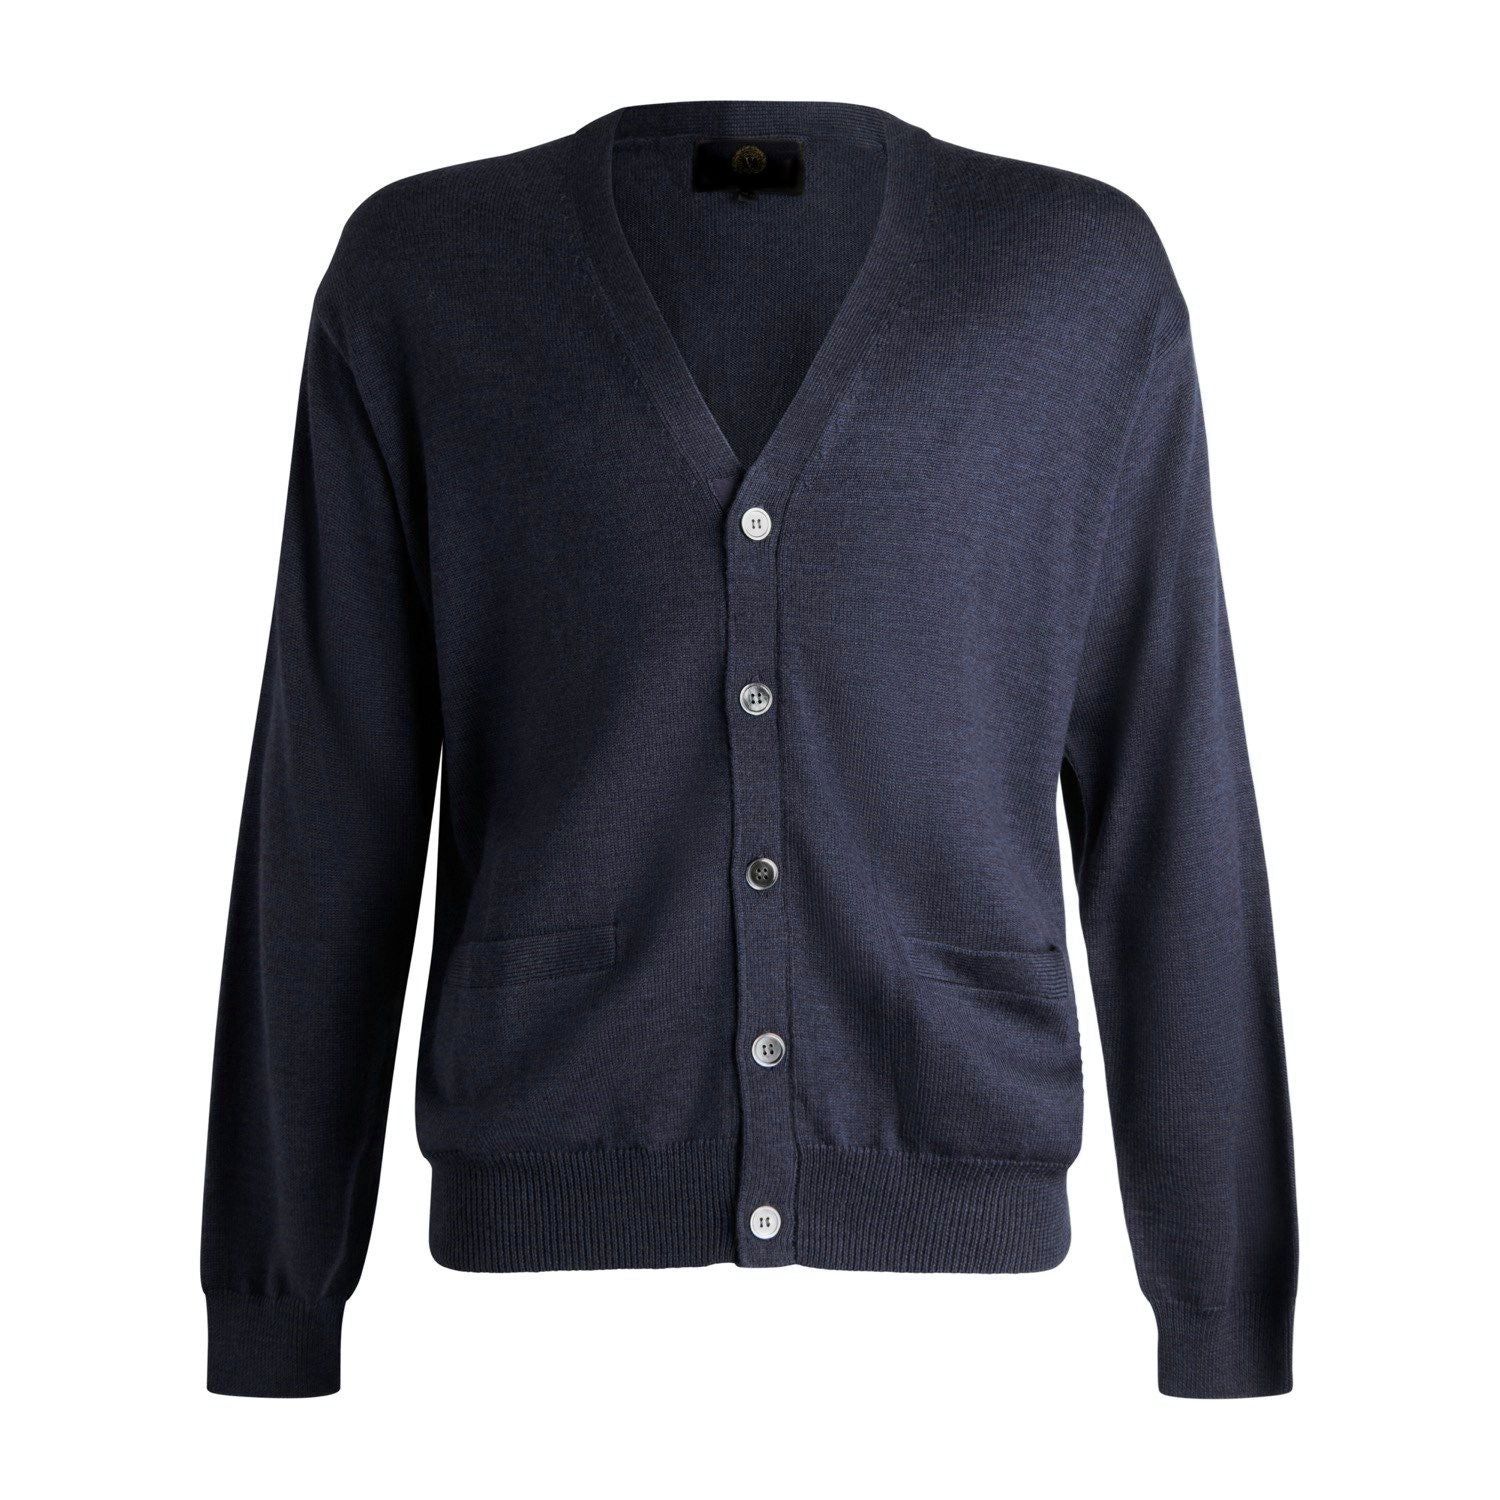 Extra Fine 'Zegna Baruffa' Merino Wool Button Front Cardigan Sweater in Navy by Viyella